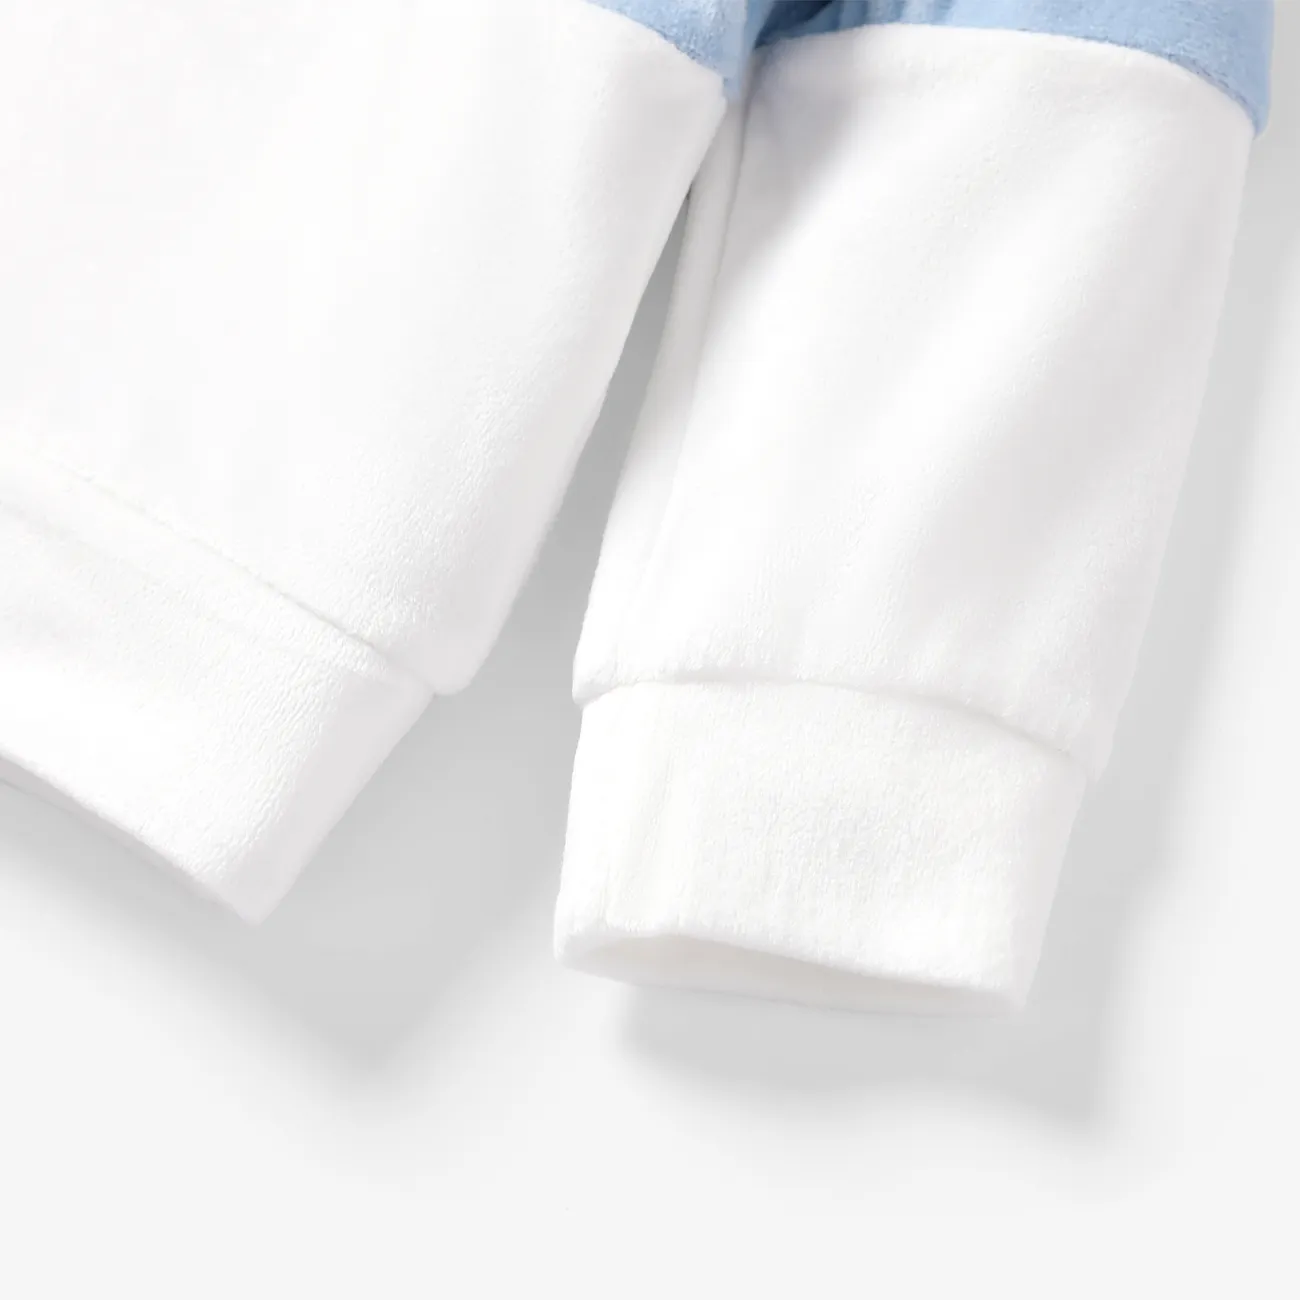 2PCS Baby Boy Solid Color Avant-garde Long Sleeve Set Blue big image 1